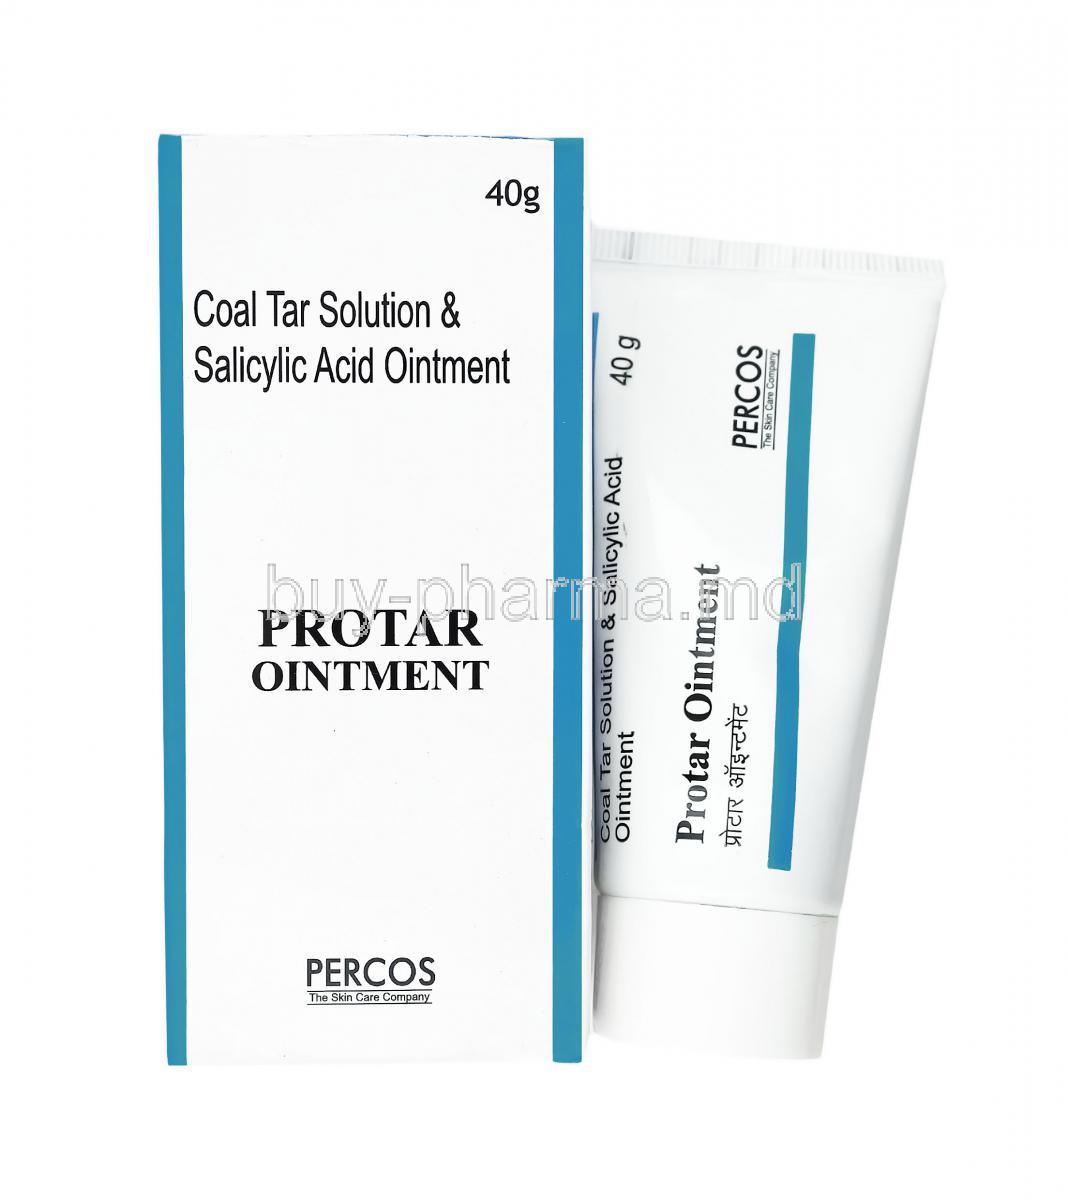 Protar Ointment, Coal Tar and Salicylic Acid